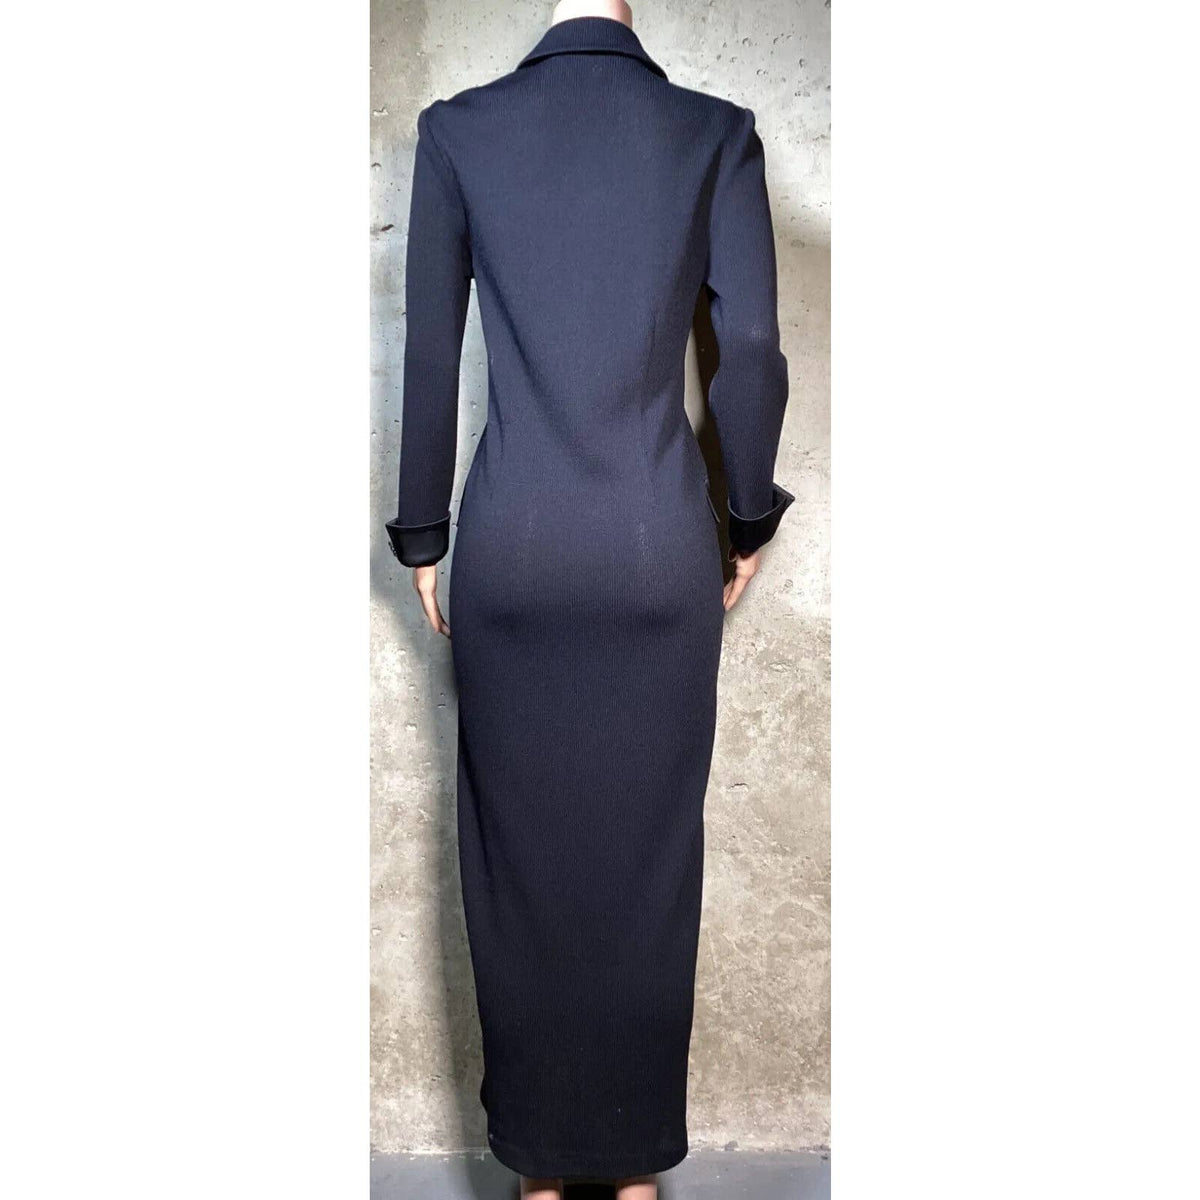 St John Couture Button Down Long Dress Coat Sz.6